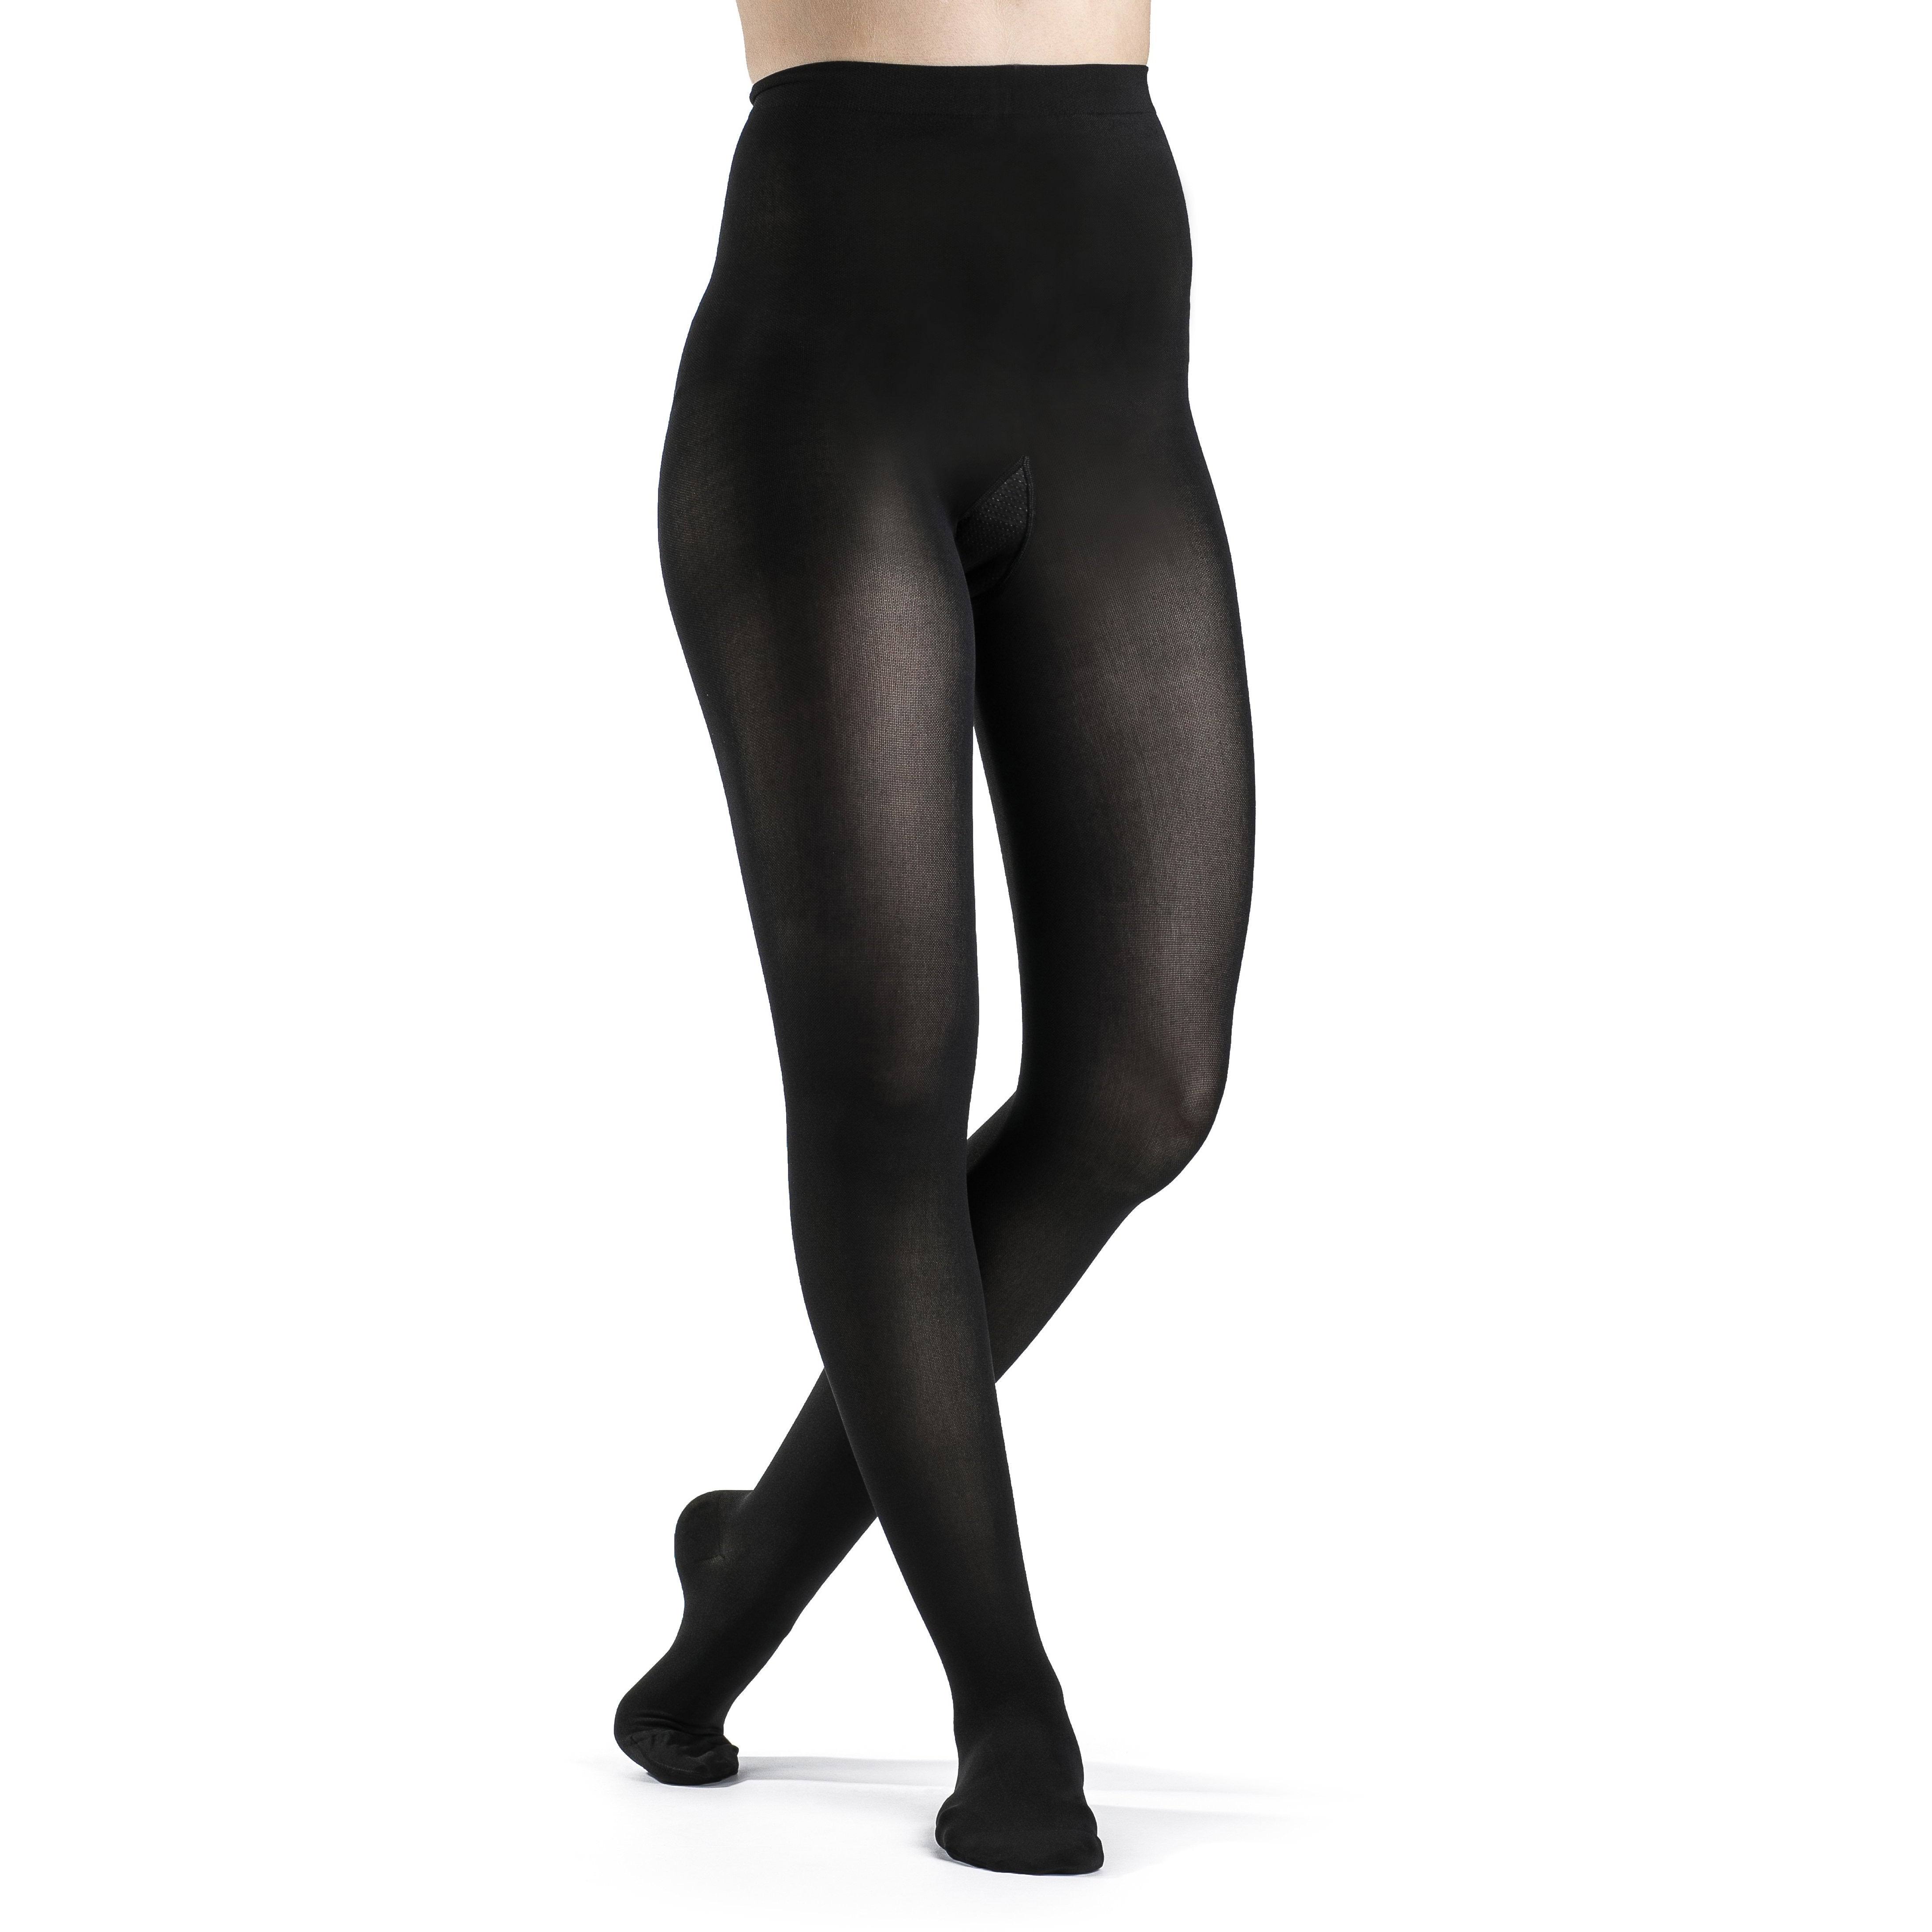 Sigvaris Women's Soft Opaque Thigh High - Medium Long, Black, 20-30mmHg